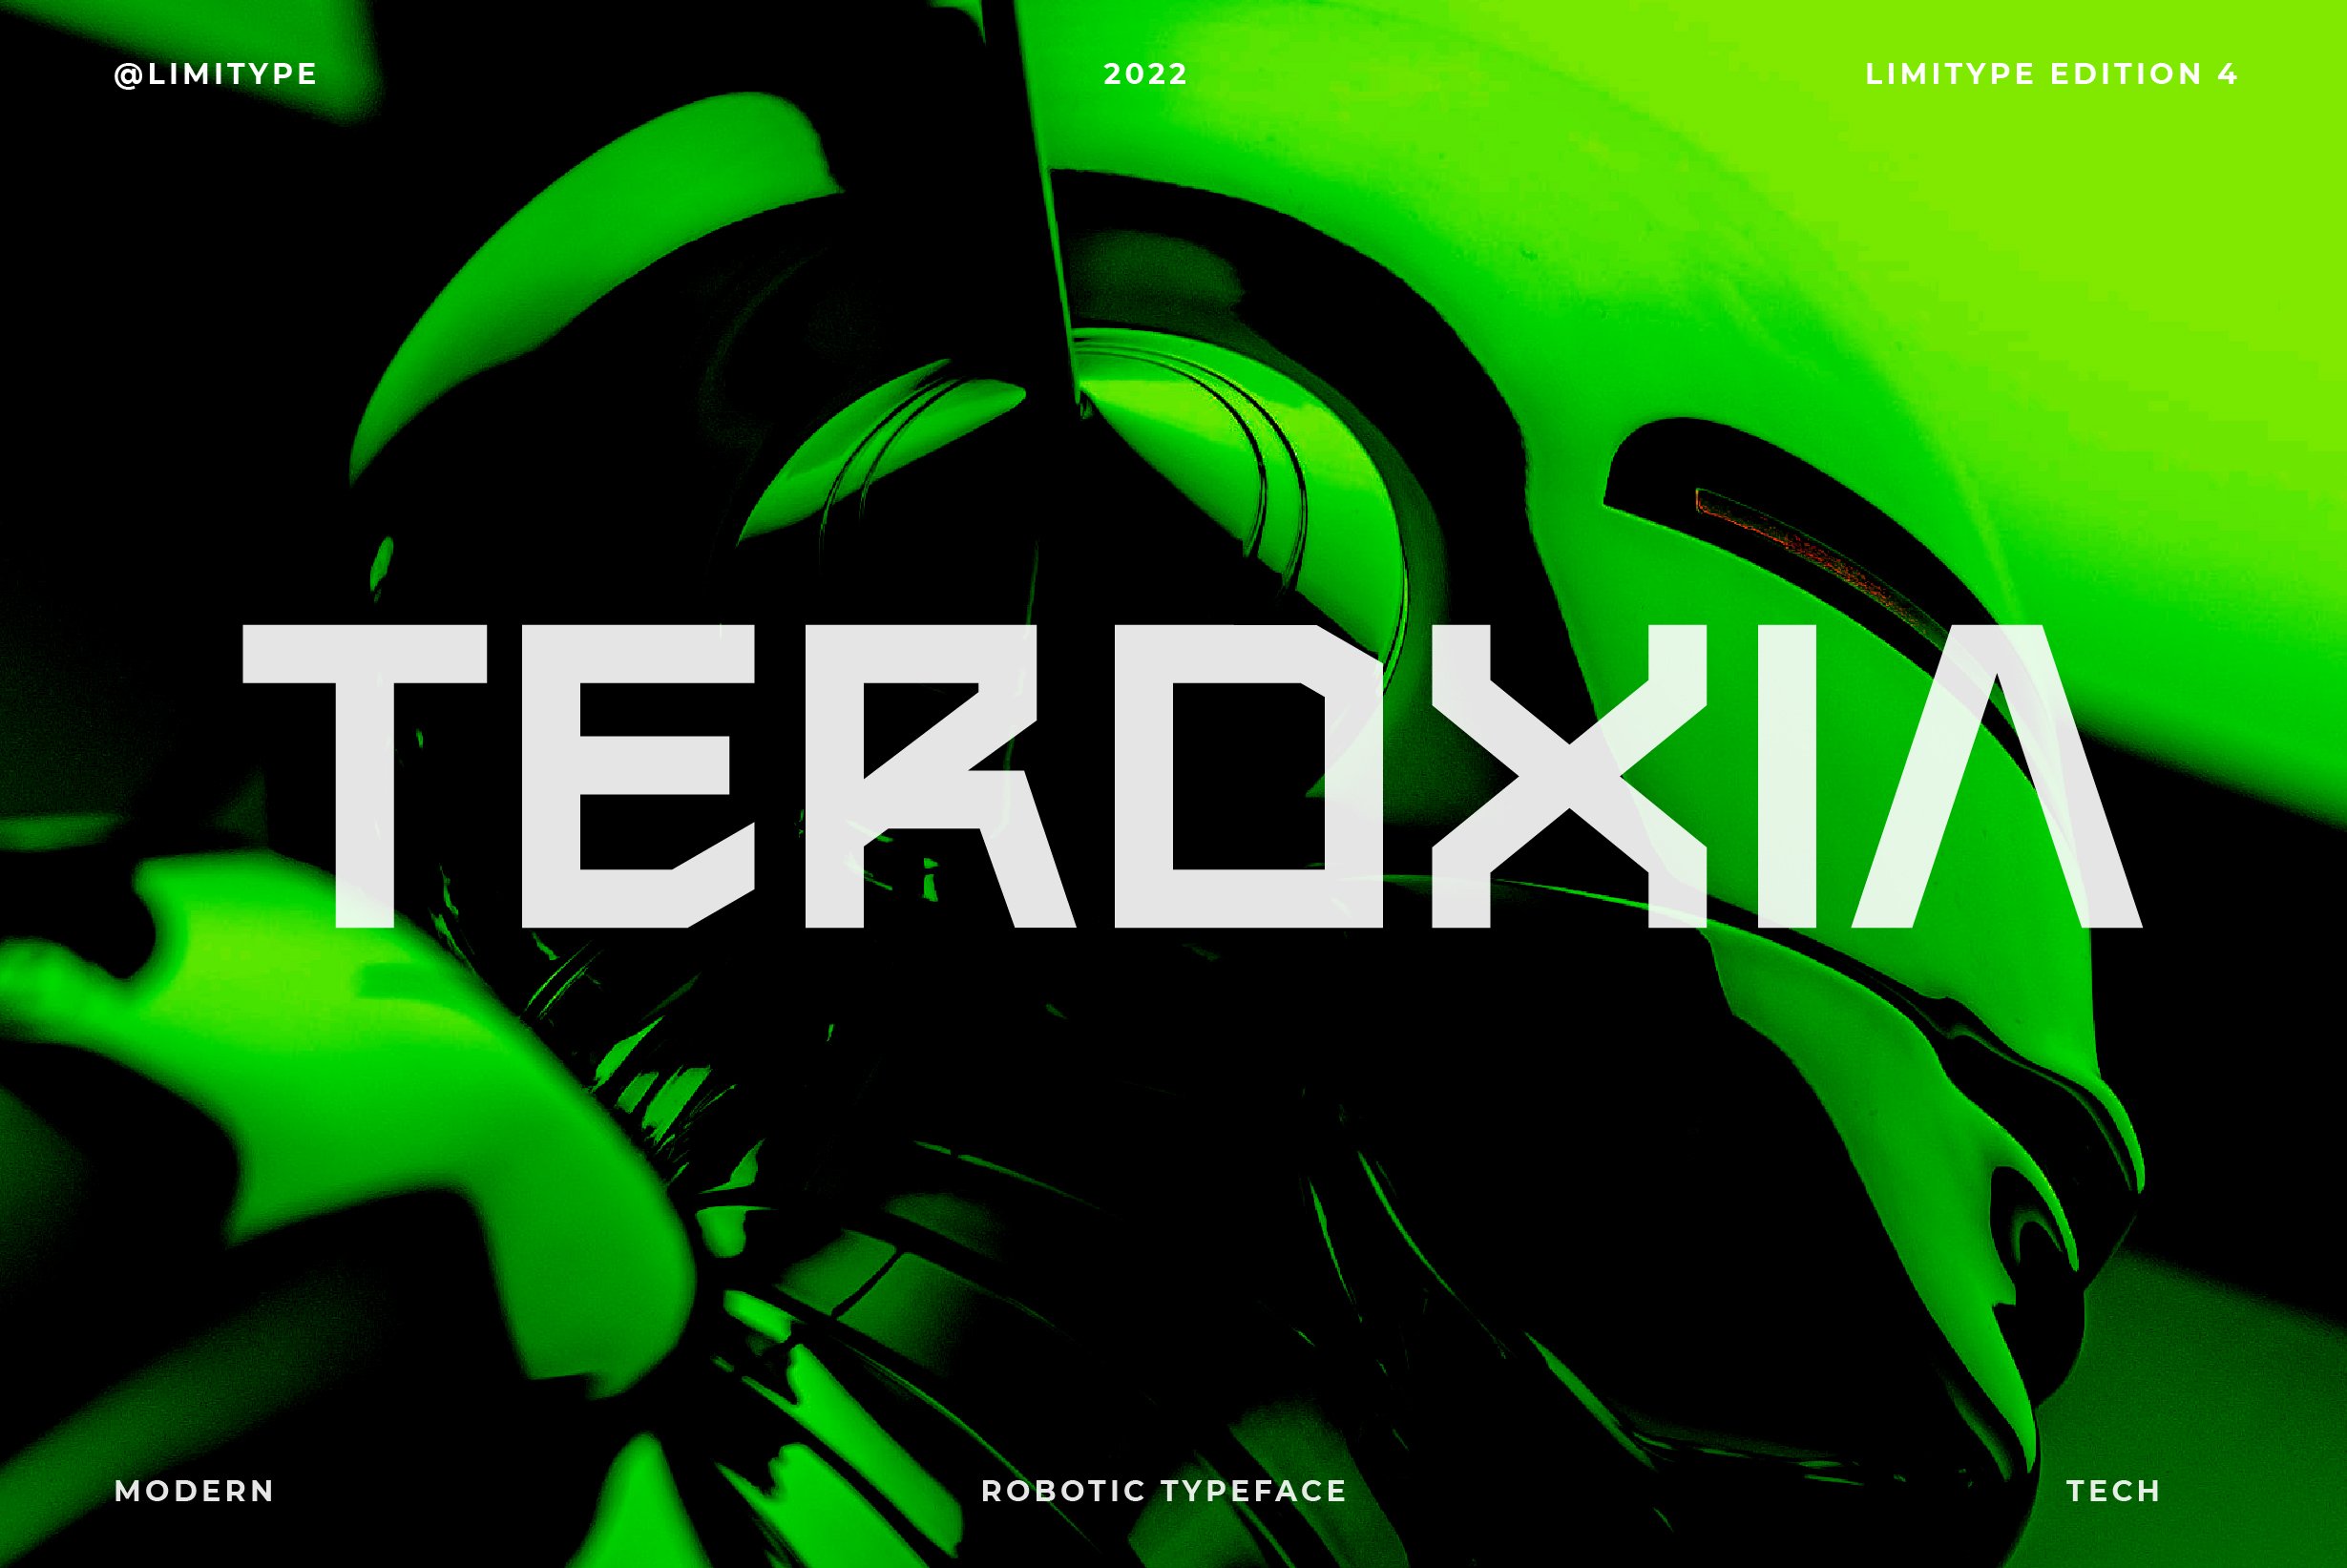 Teroxia - Futuristic Robotic Font cover image.